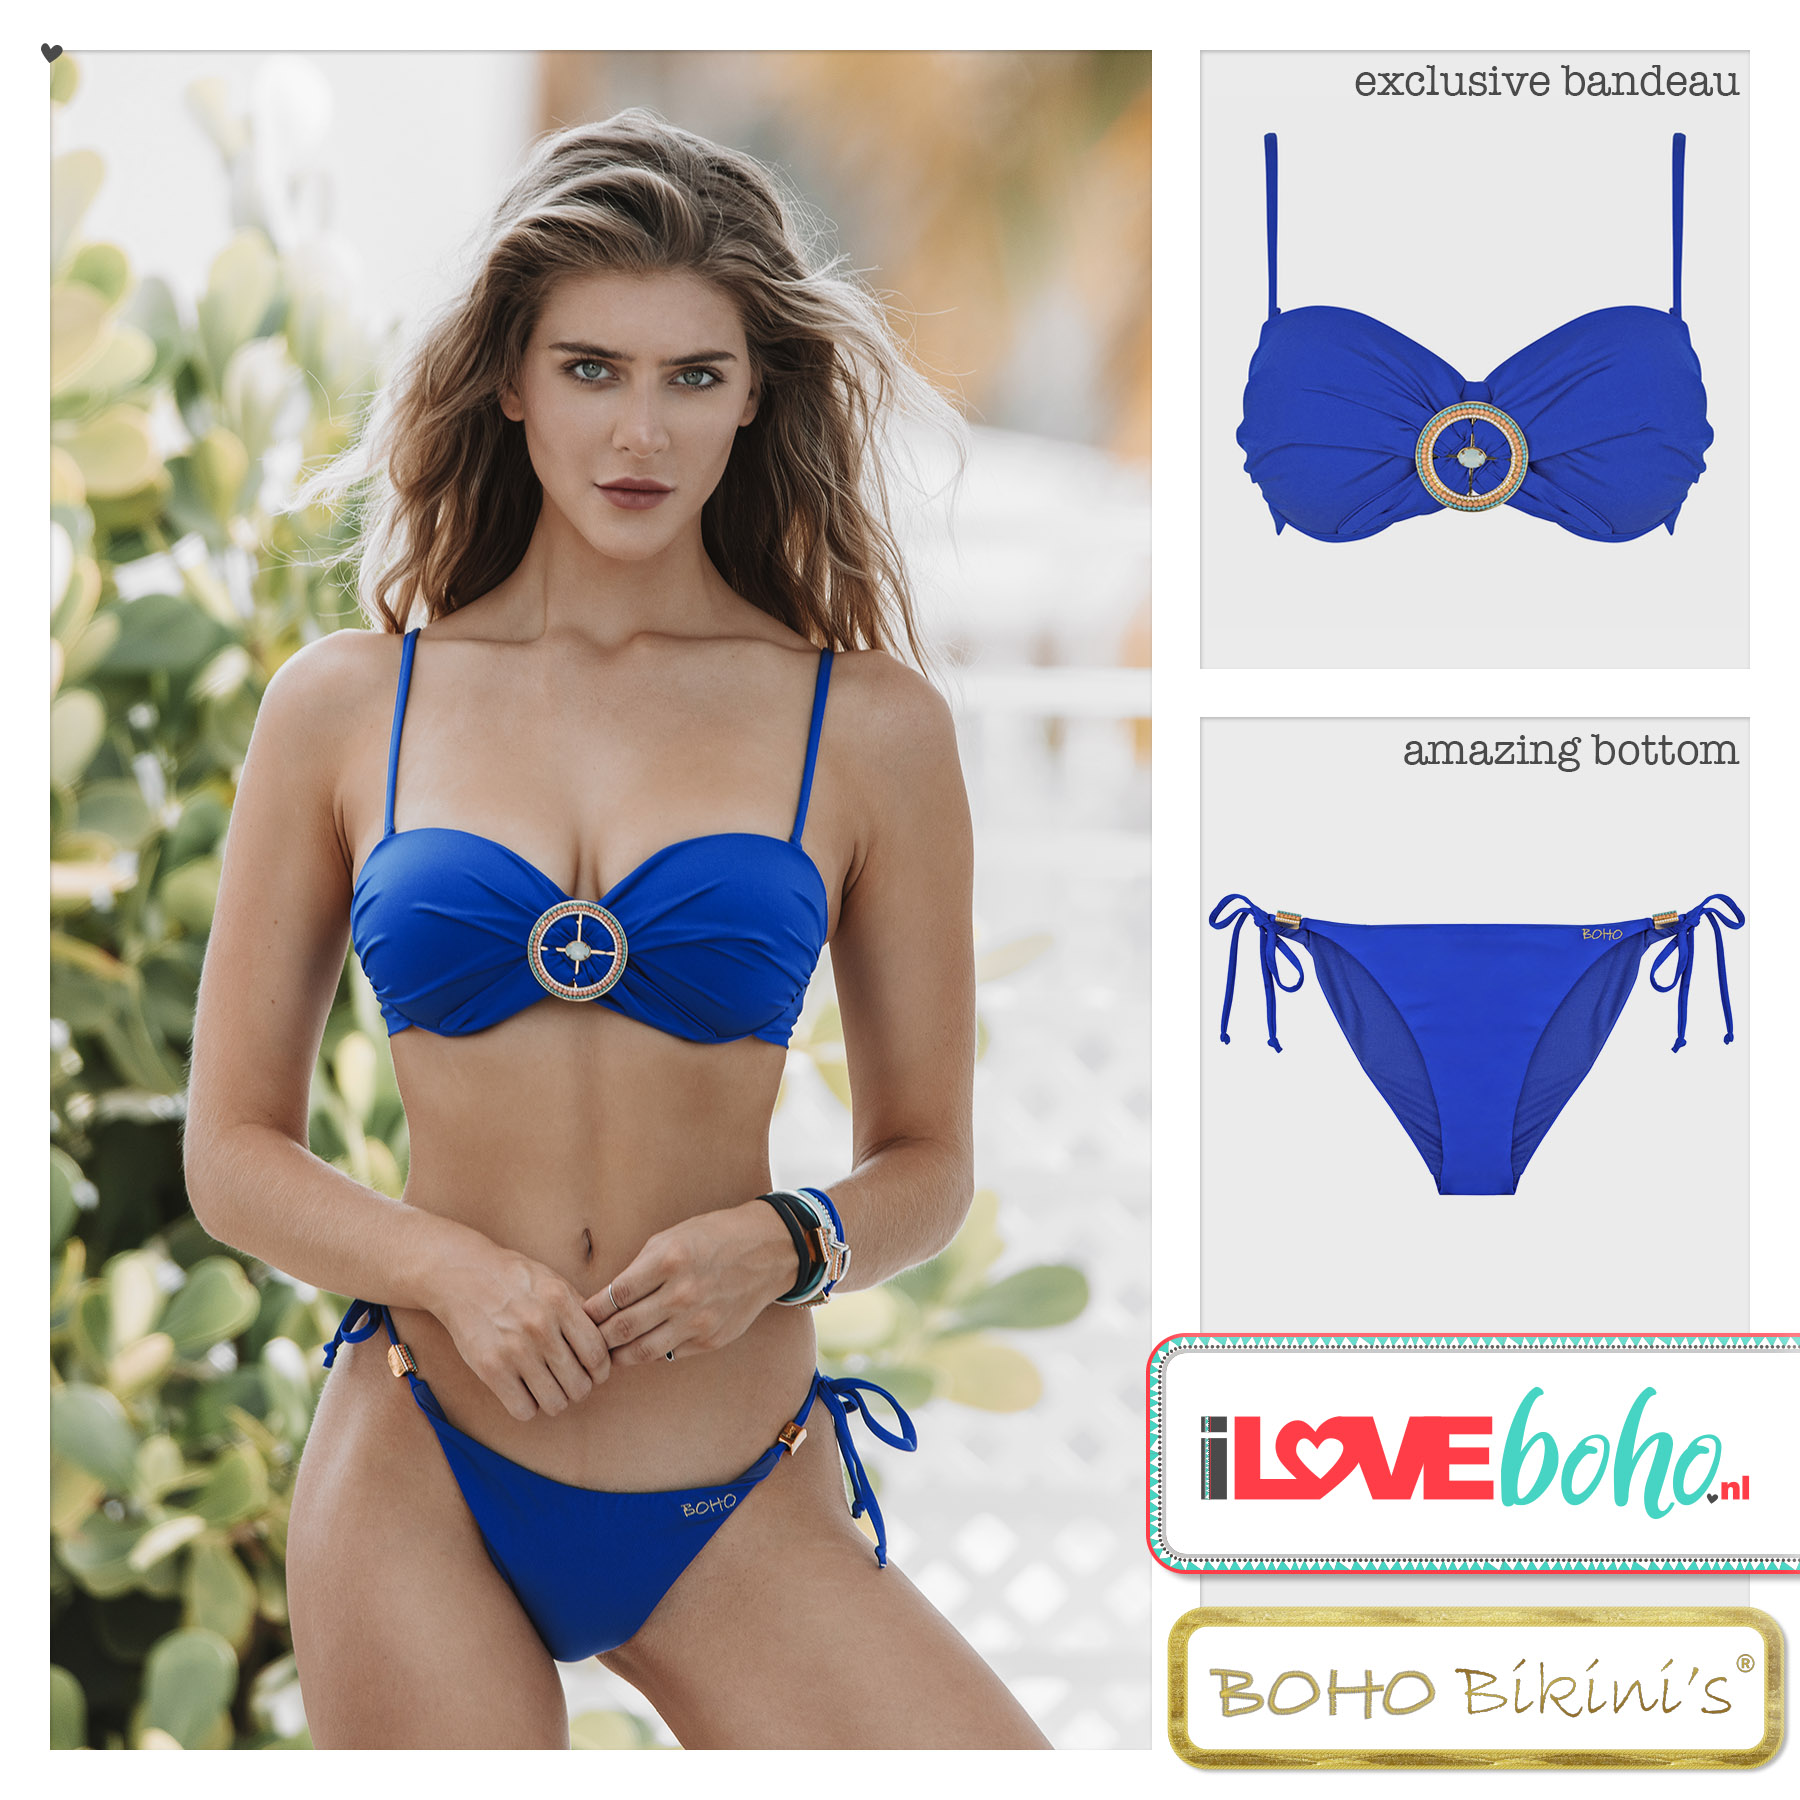 BOHO top – exclusive bandeau – lapiz blauw - s/m/l/xl - I Love BOHO